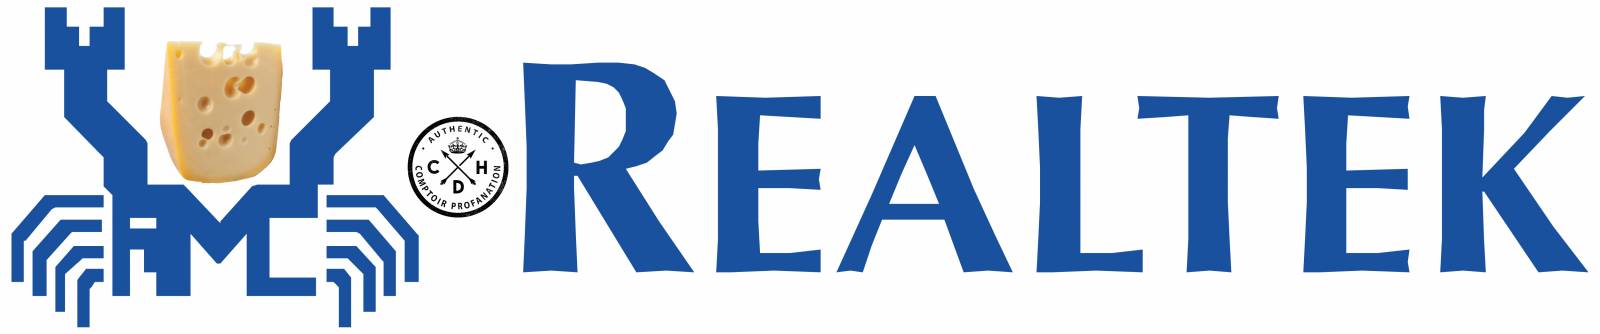 realtek logo fromage cdh